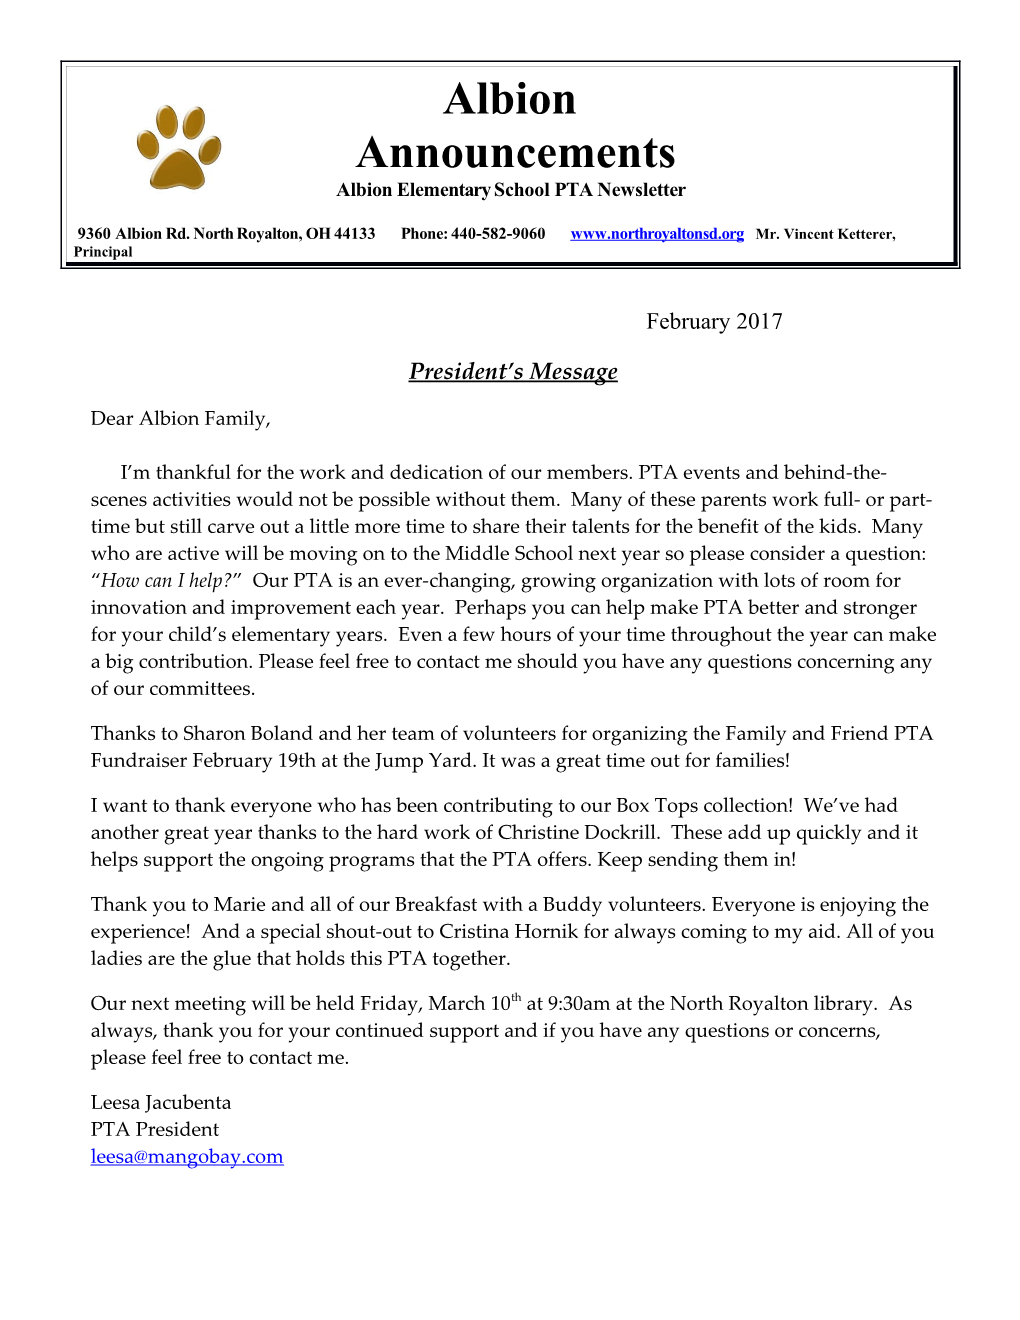 Albion Elementary School PTA Newsletter